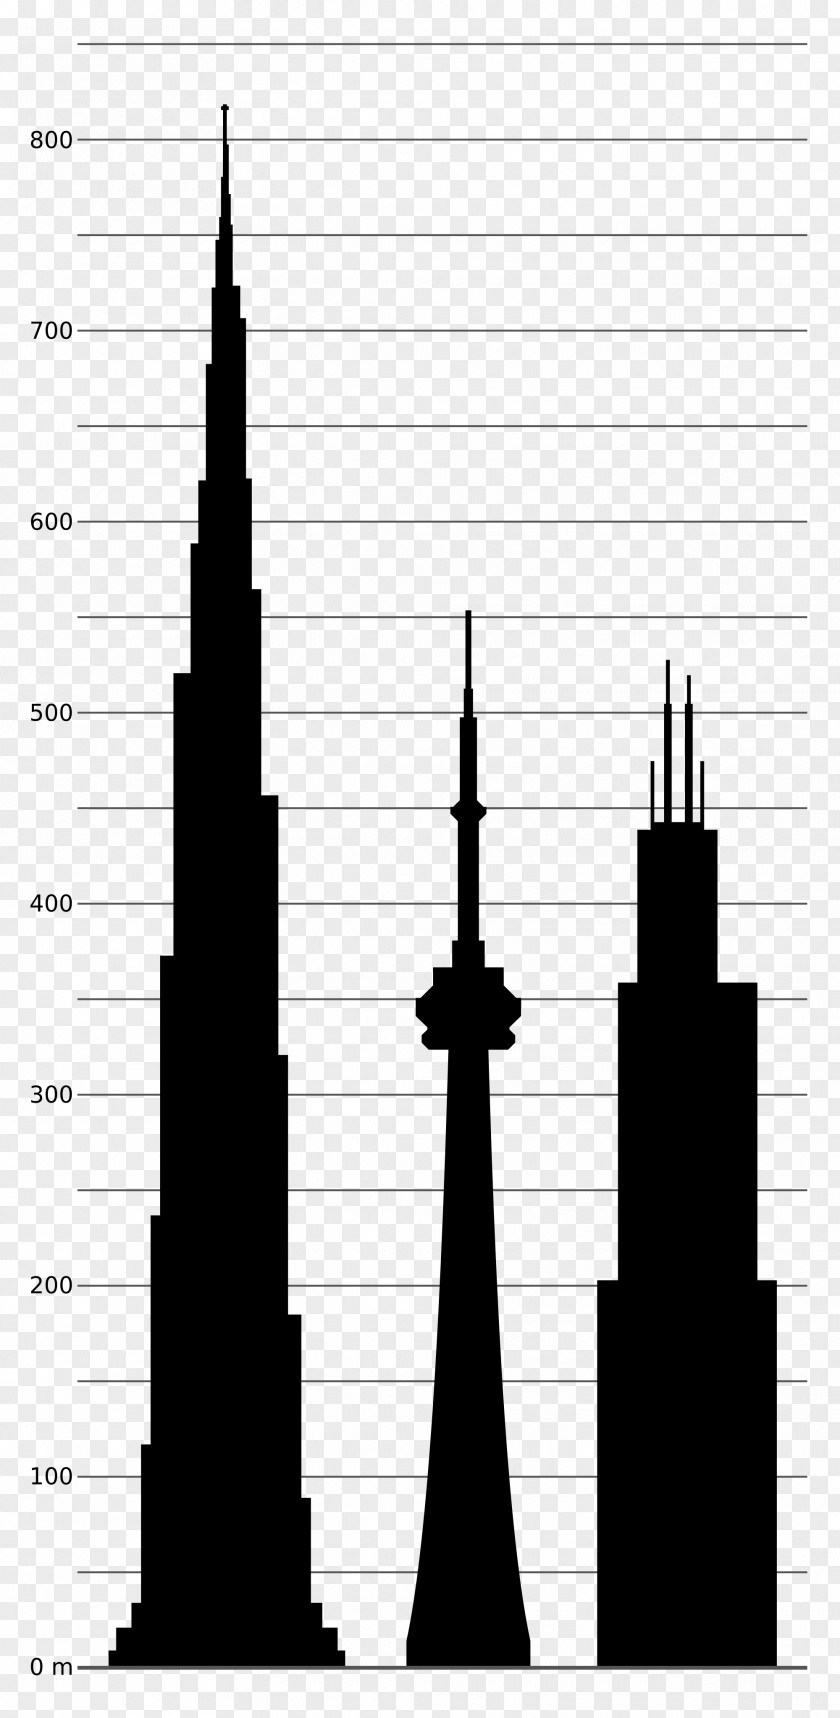 Burj Khalifa Willis Tower CN 875 North Michigan Avenue Space Needle PNG